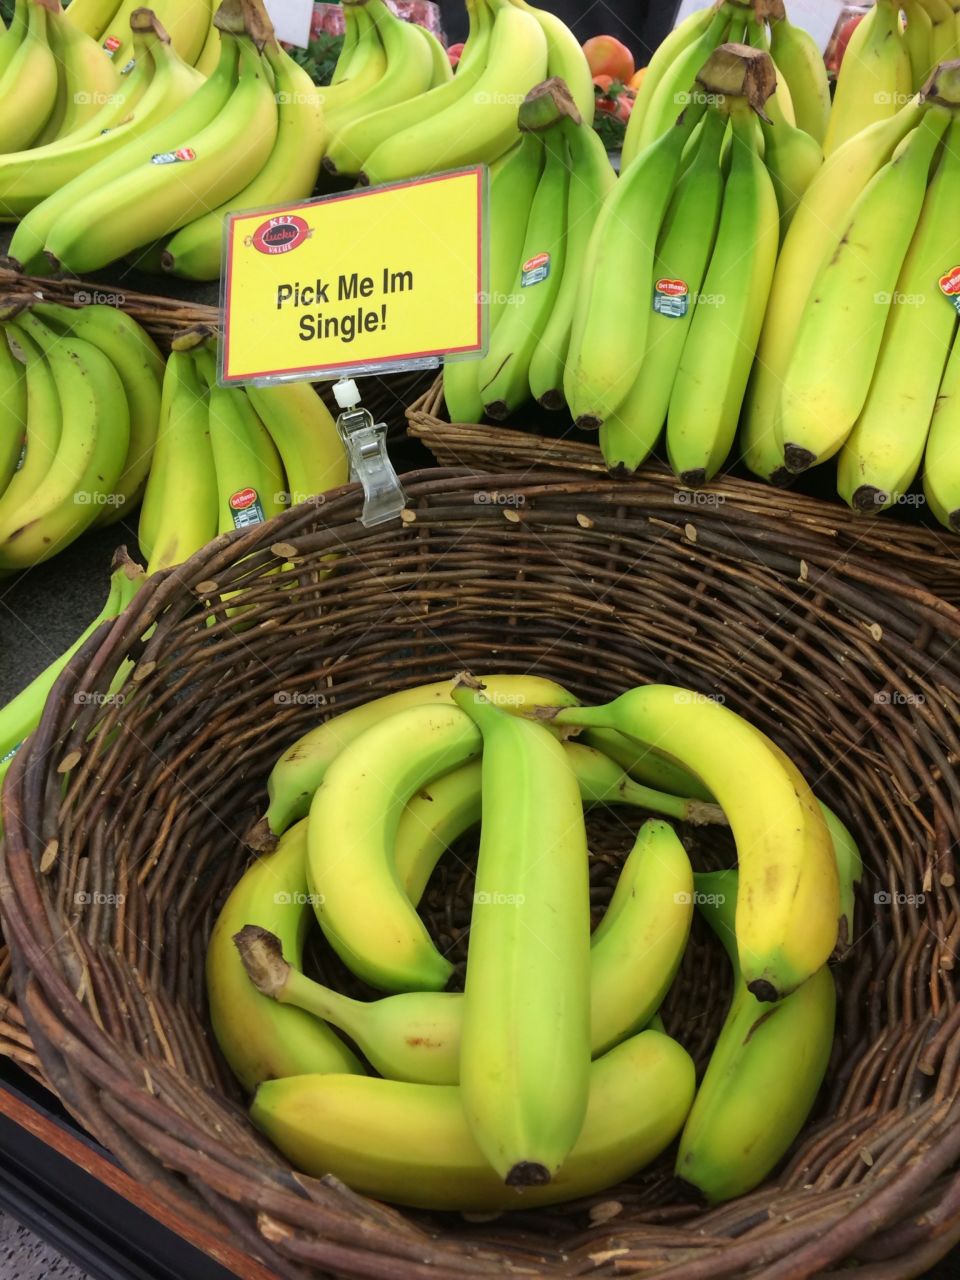 Pick me I'm single bananas